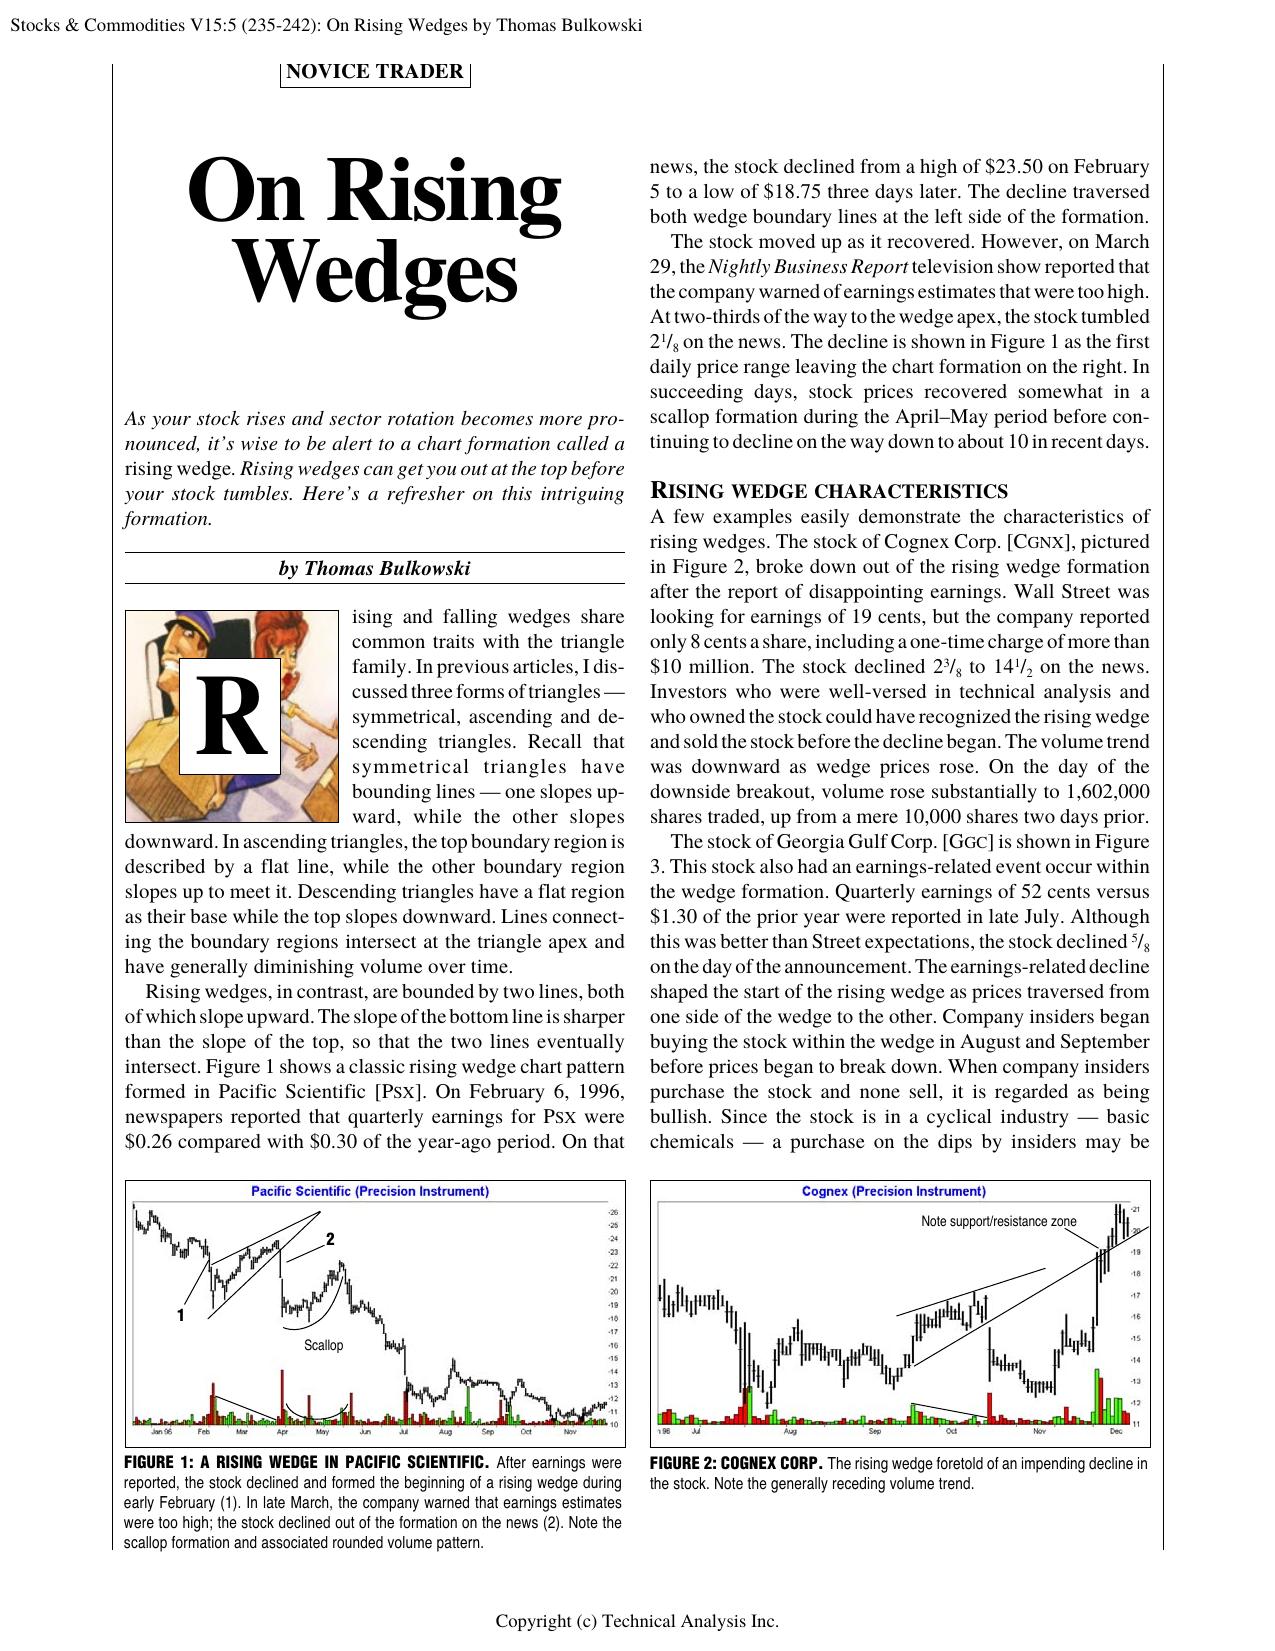 Stocks & Commodities V.15:5 (235-242): On Rising Wedges by Thomas Bulkowski by Thomas Bulkowski